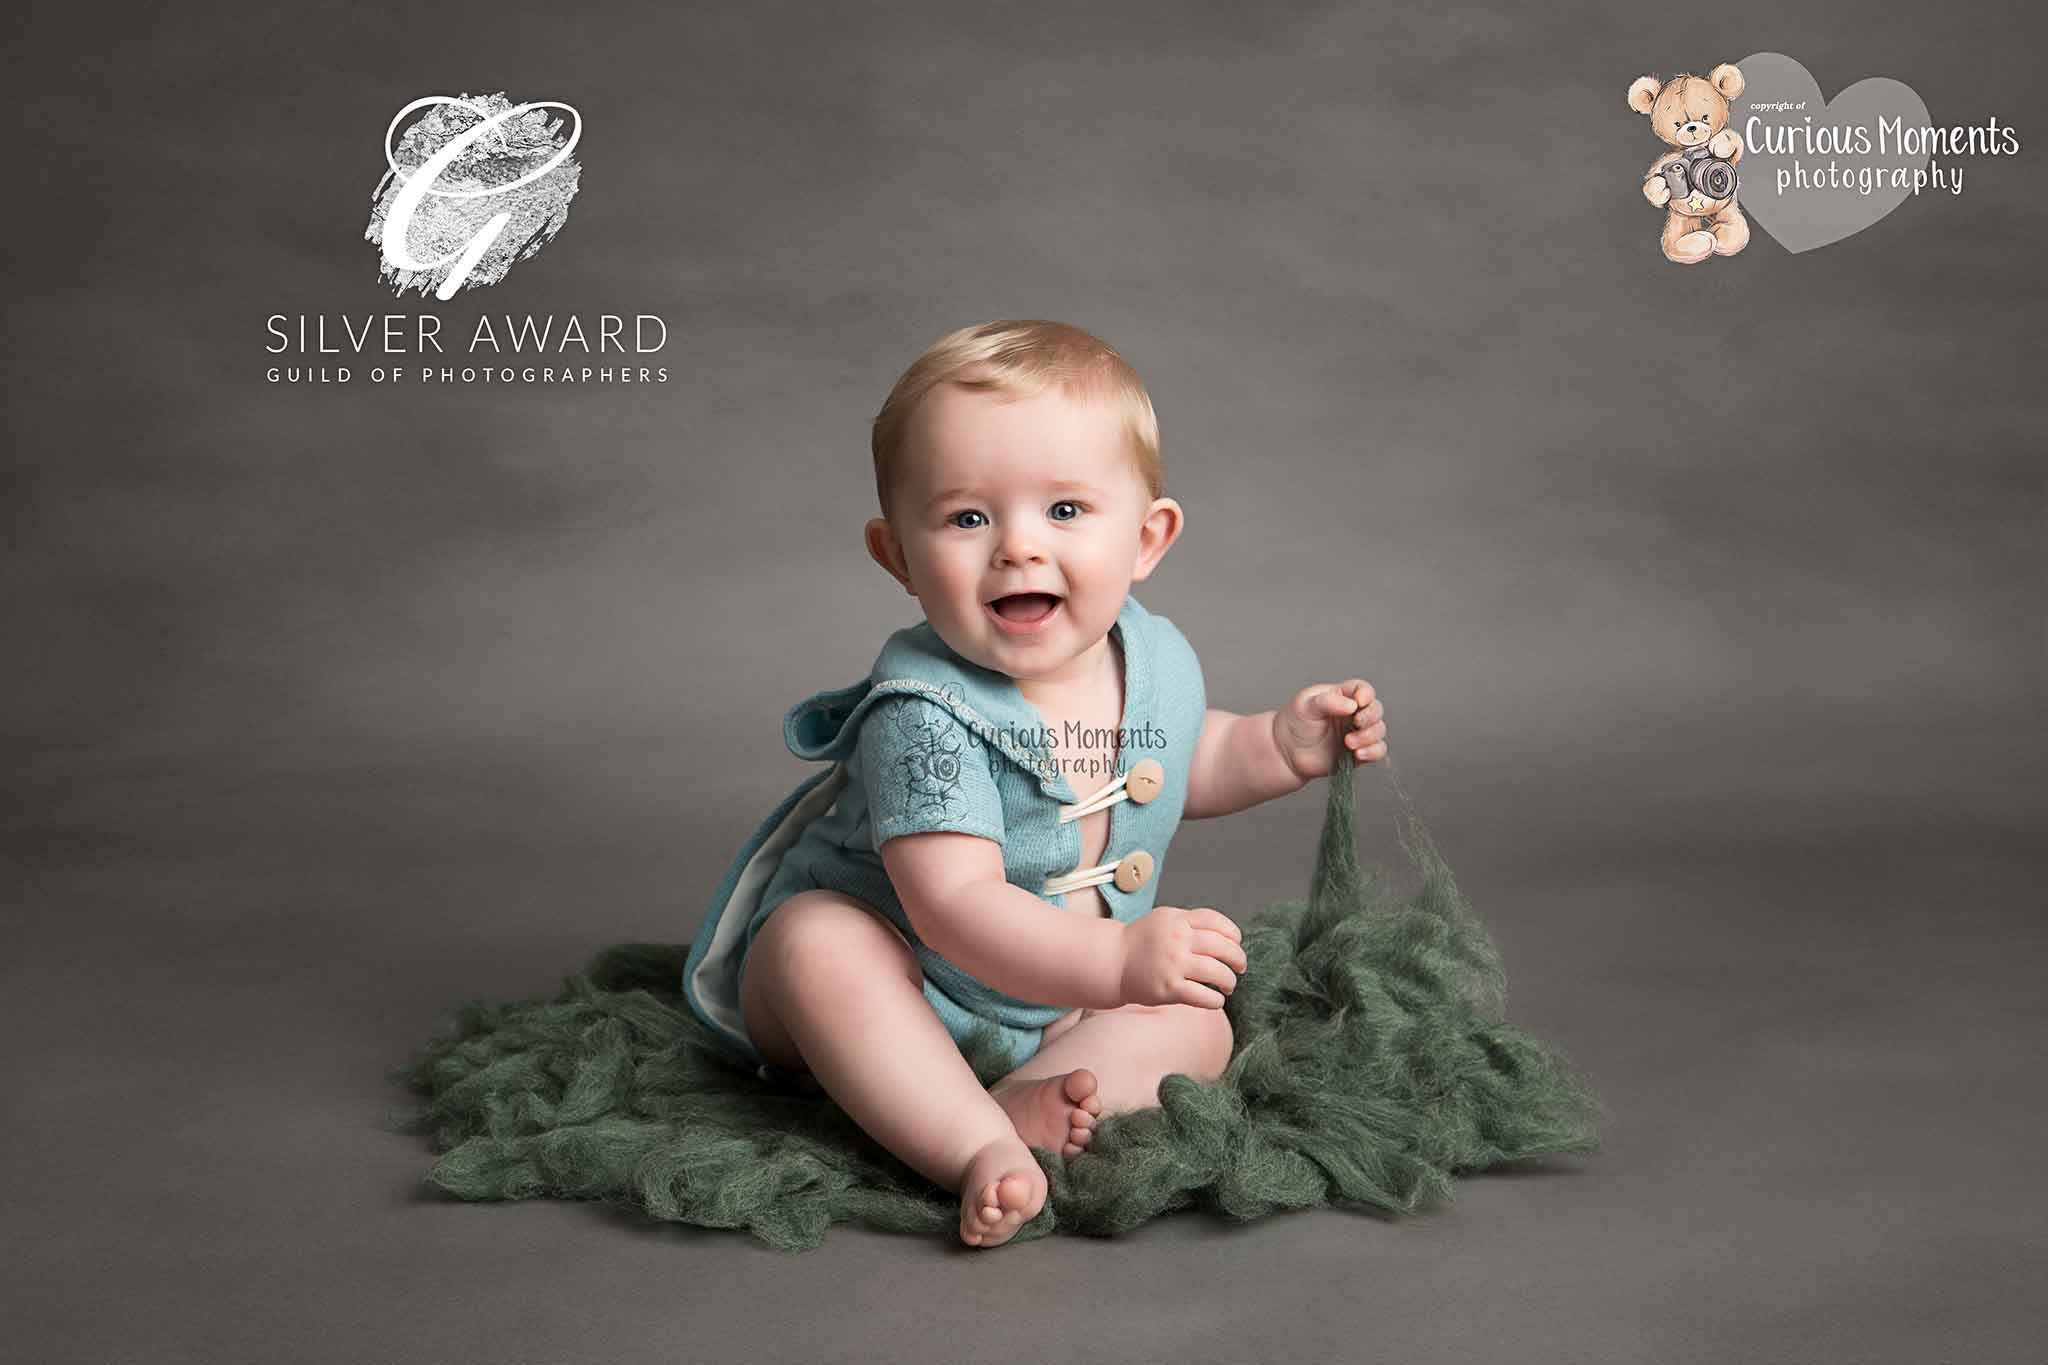 Award winning image taken by best baby photographer of baby boy sat on green fluffy mat